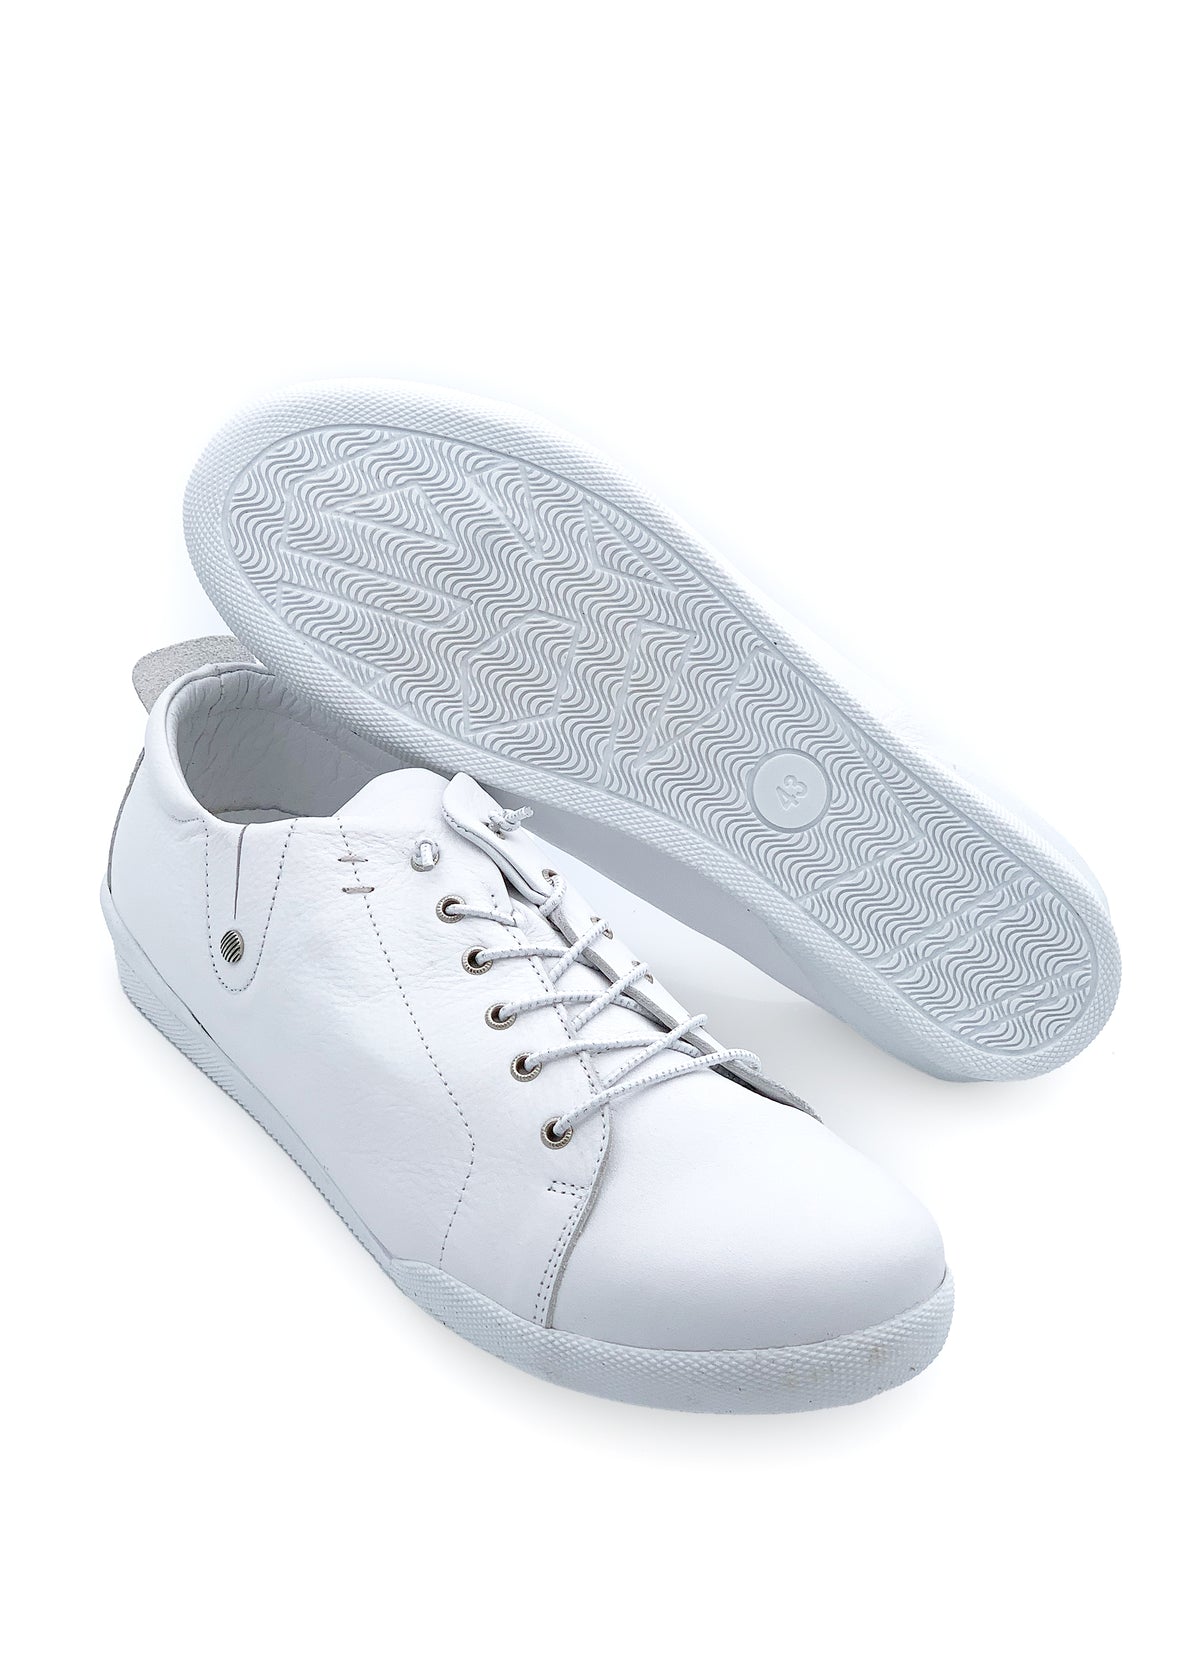 Low top sneakers - white, elastic straps